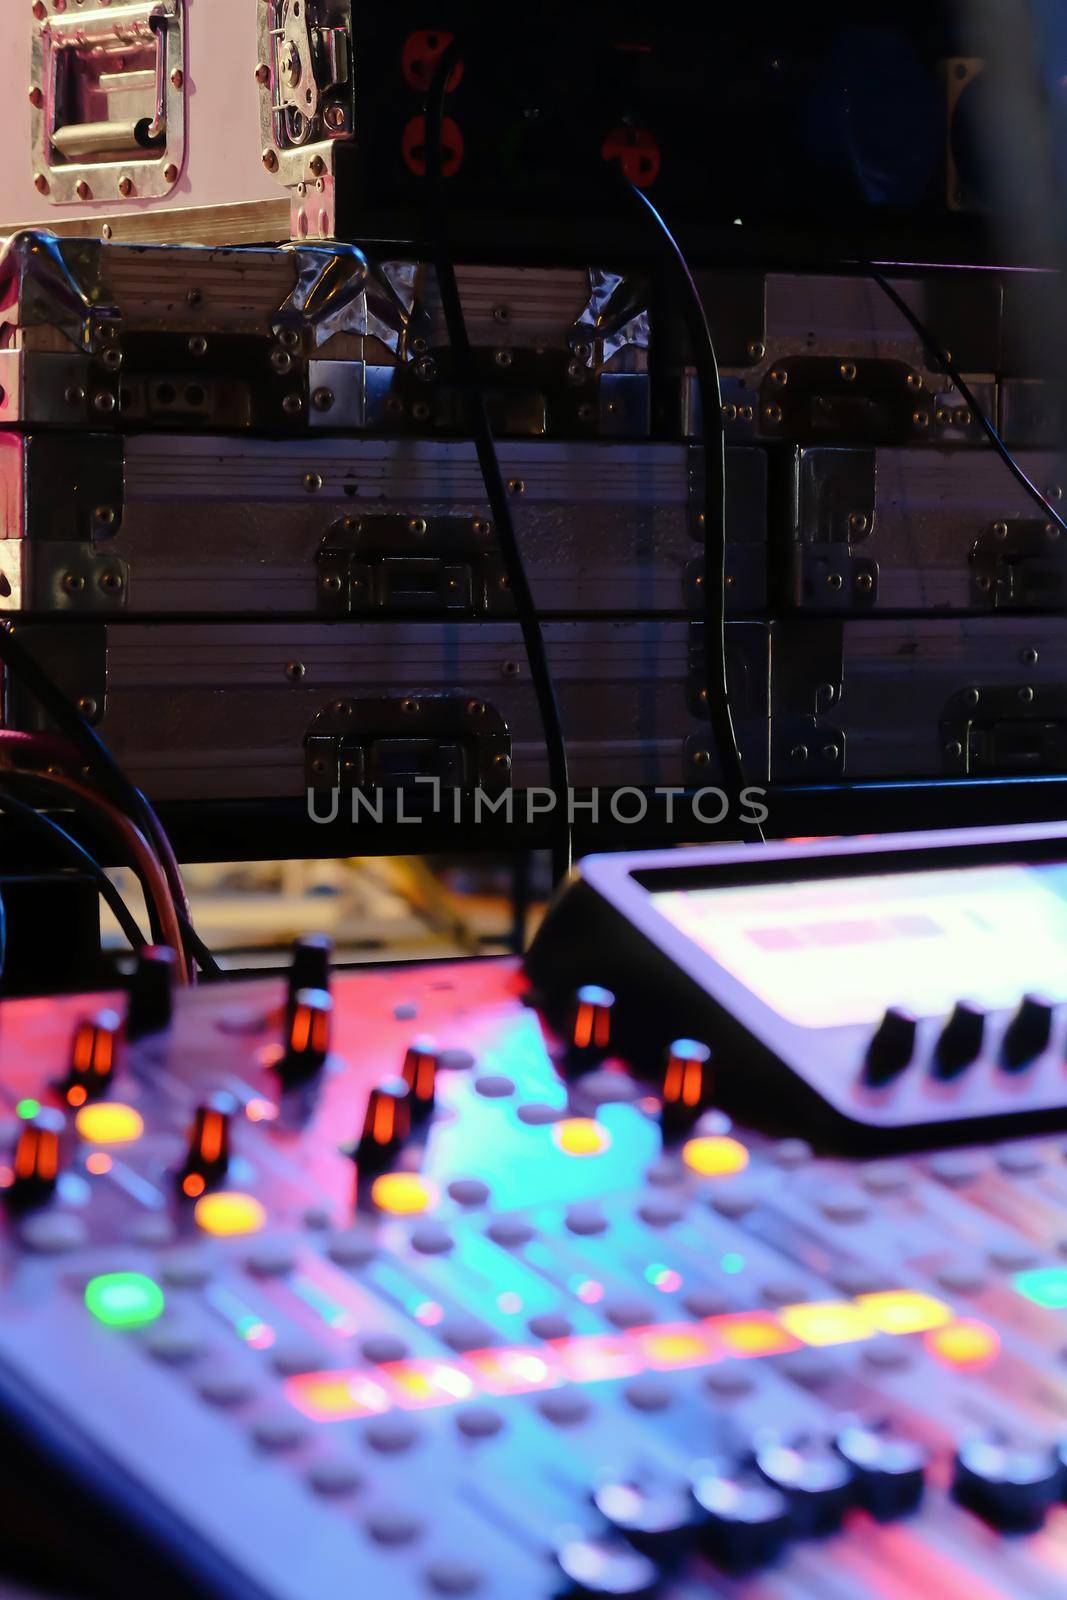 audio mixing control panel by ponsulak